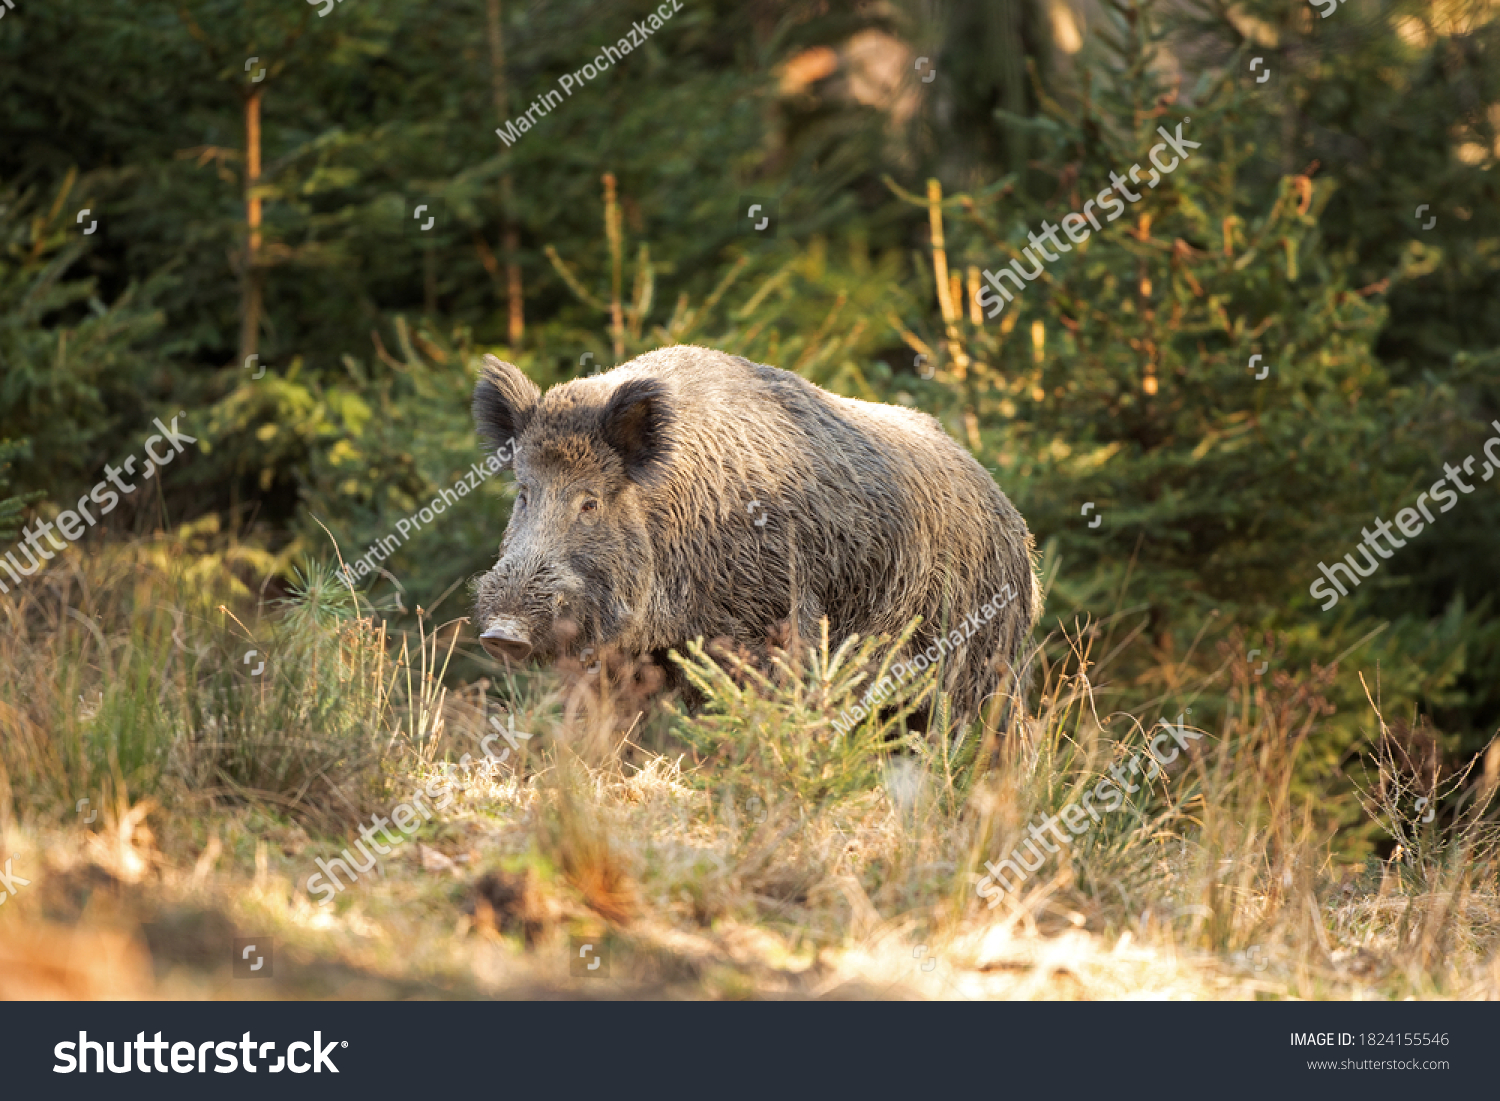 Wild boar walk in the forest. Calm wild boar. European wildlife. Strong wild boar in nature #1824155546